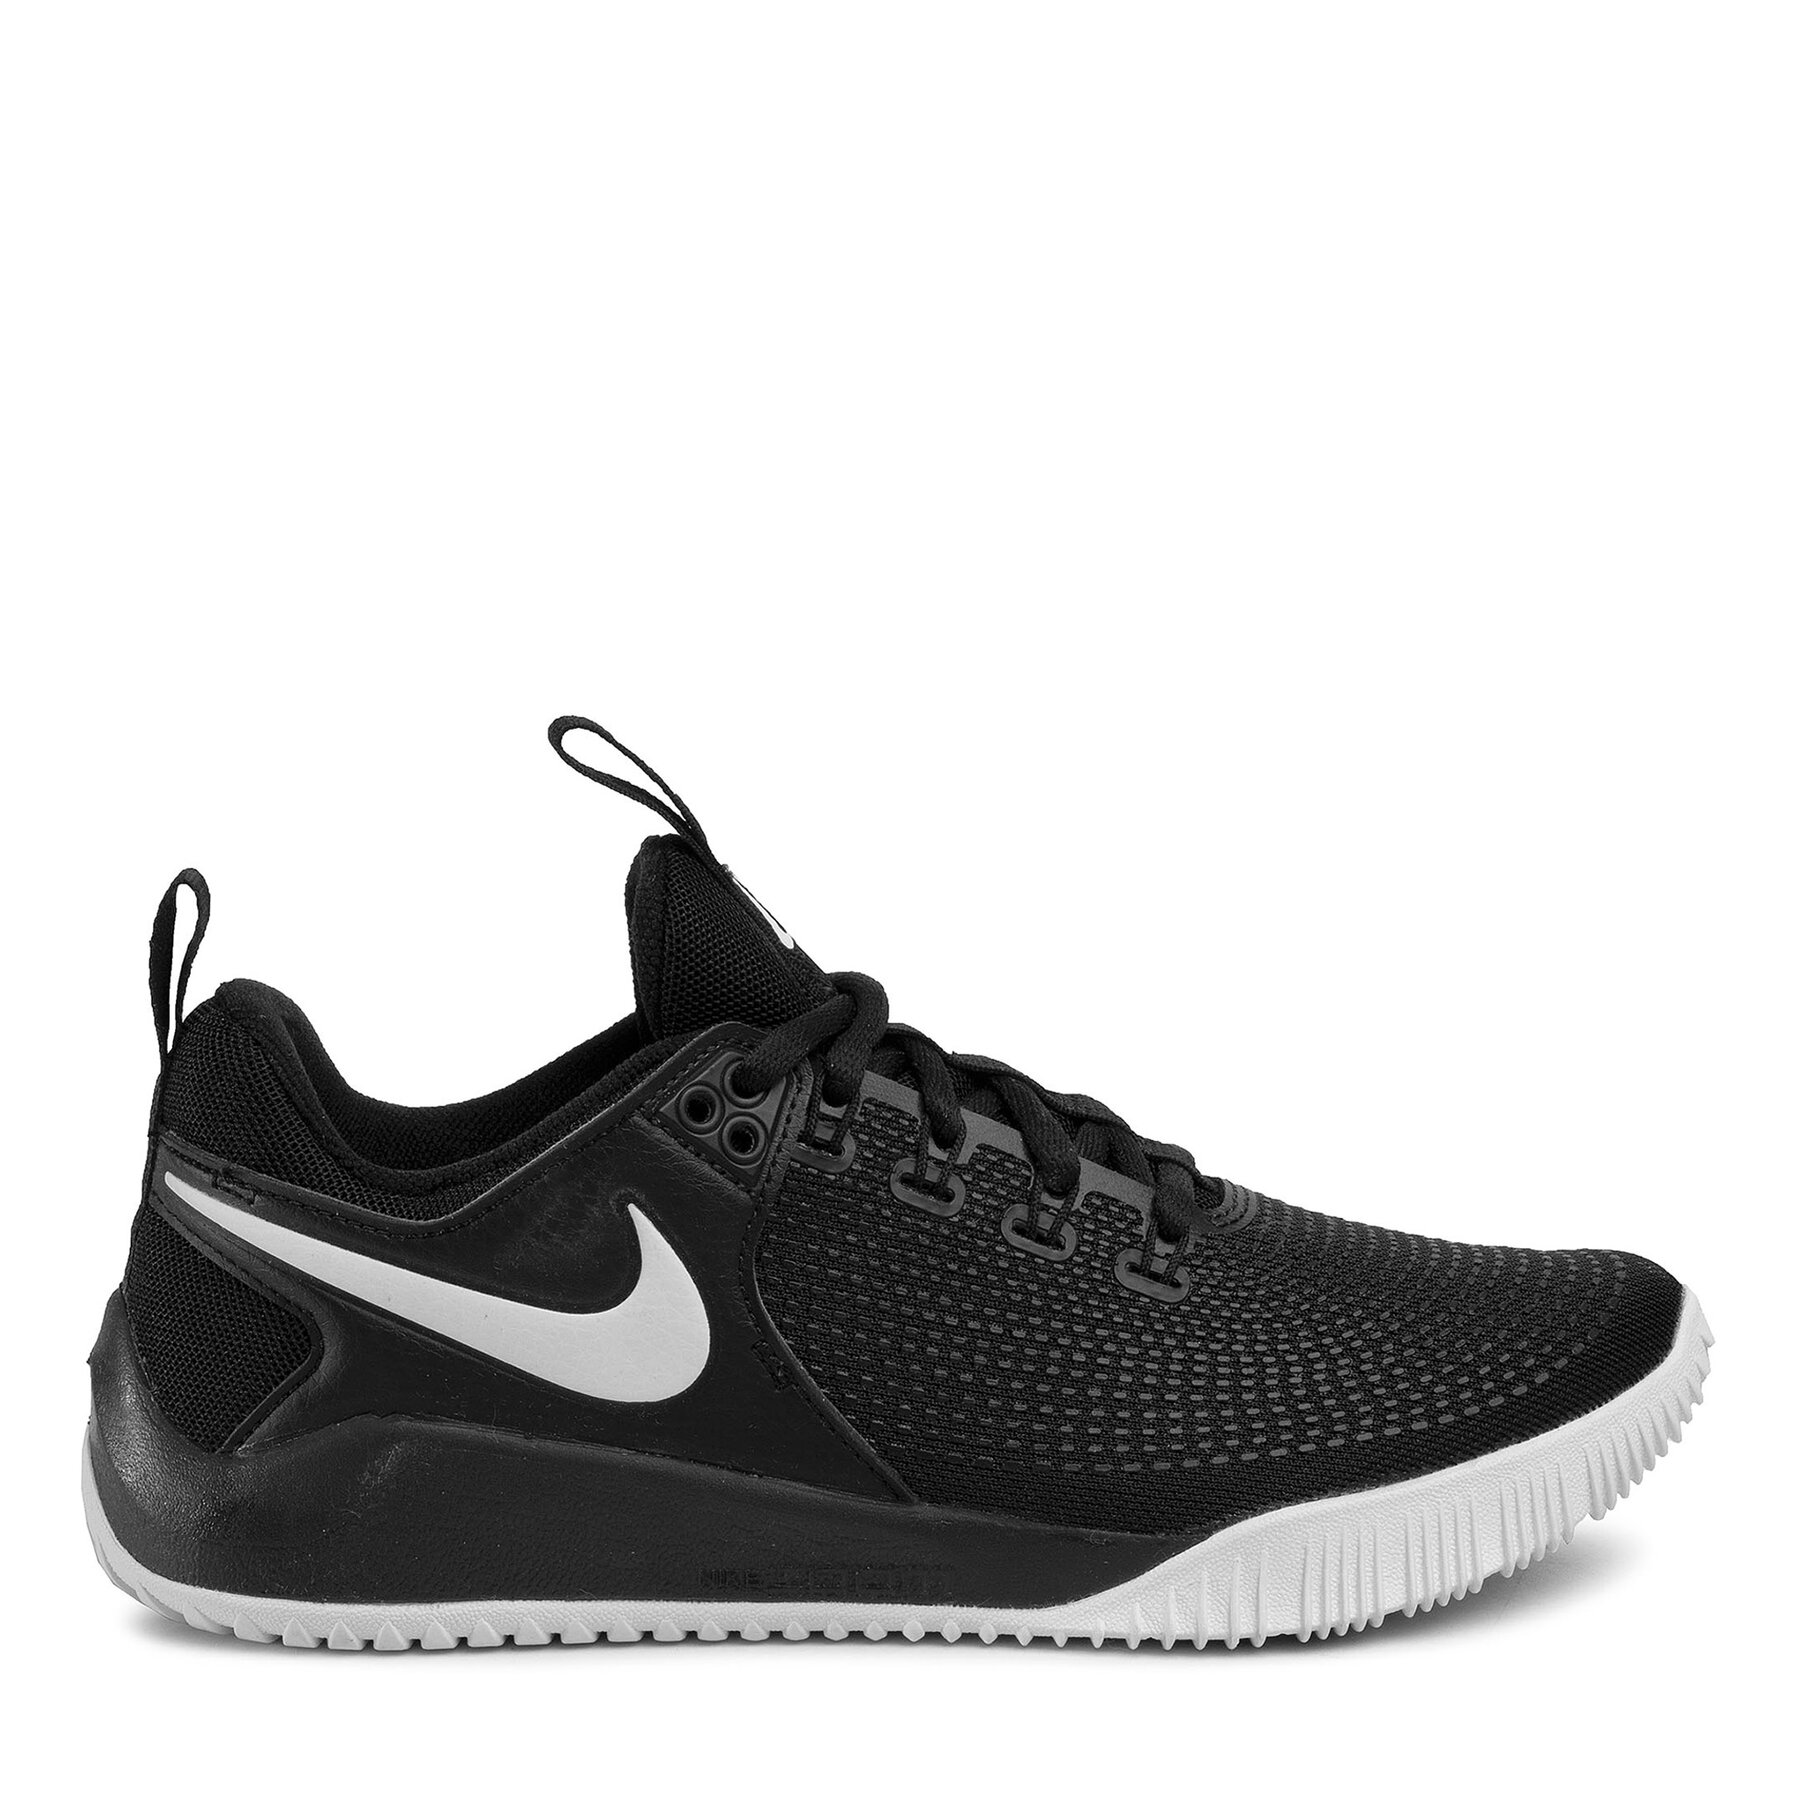 Batai Nike Zoom Hyperace 2 AA0286 001 Black/White